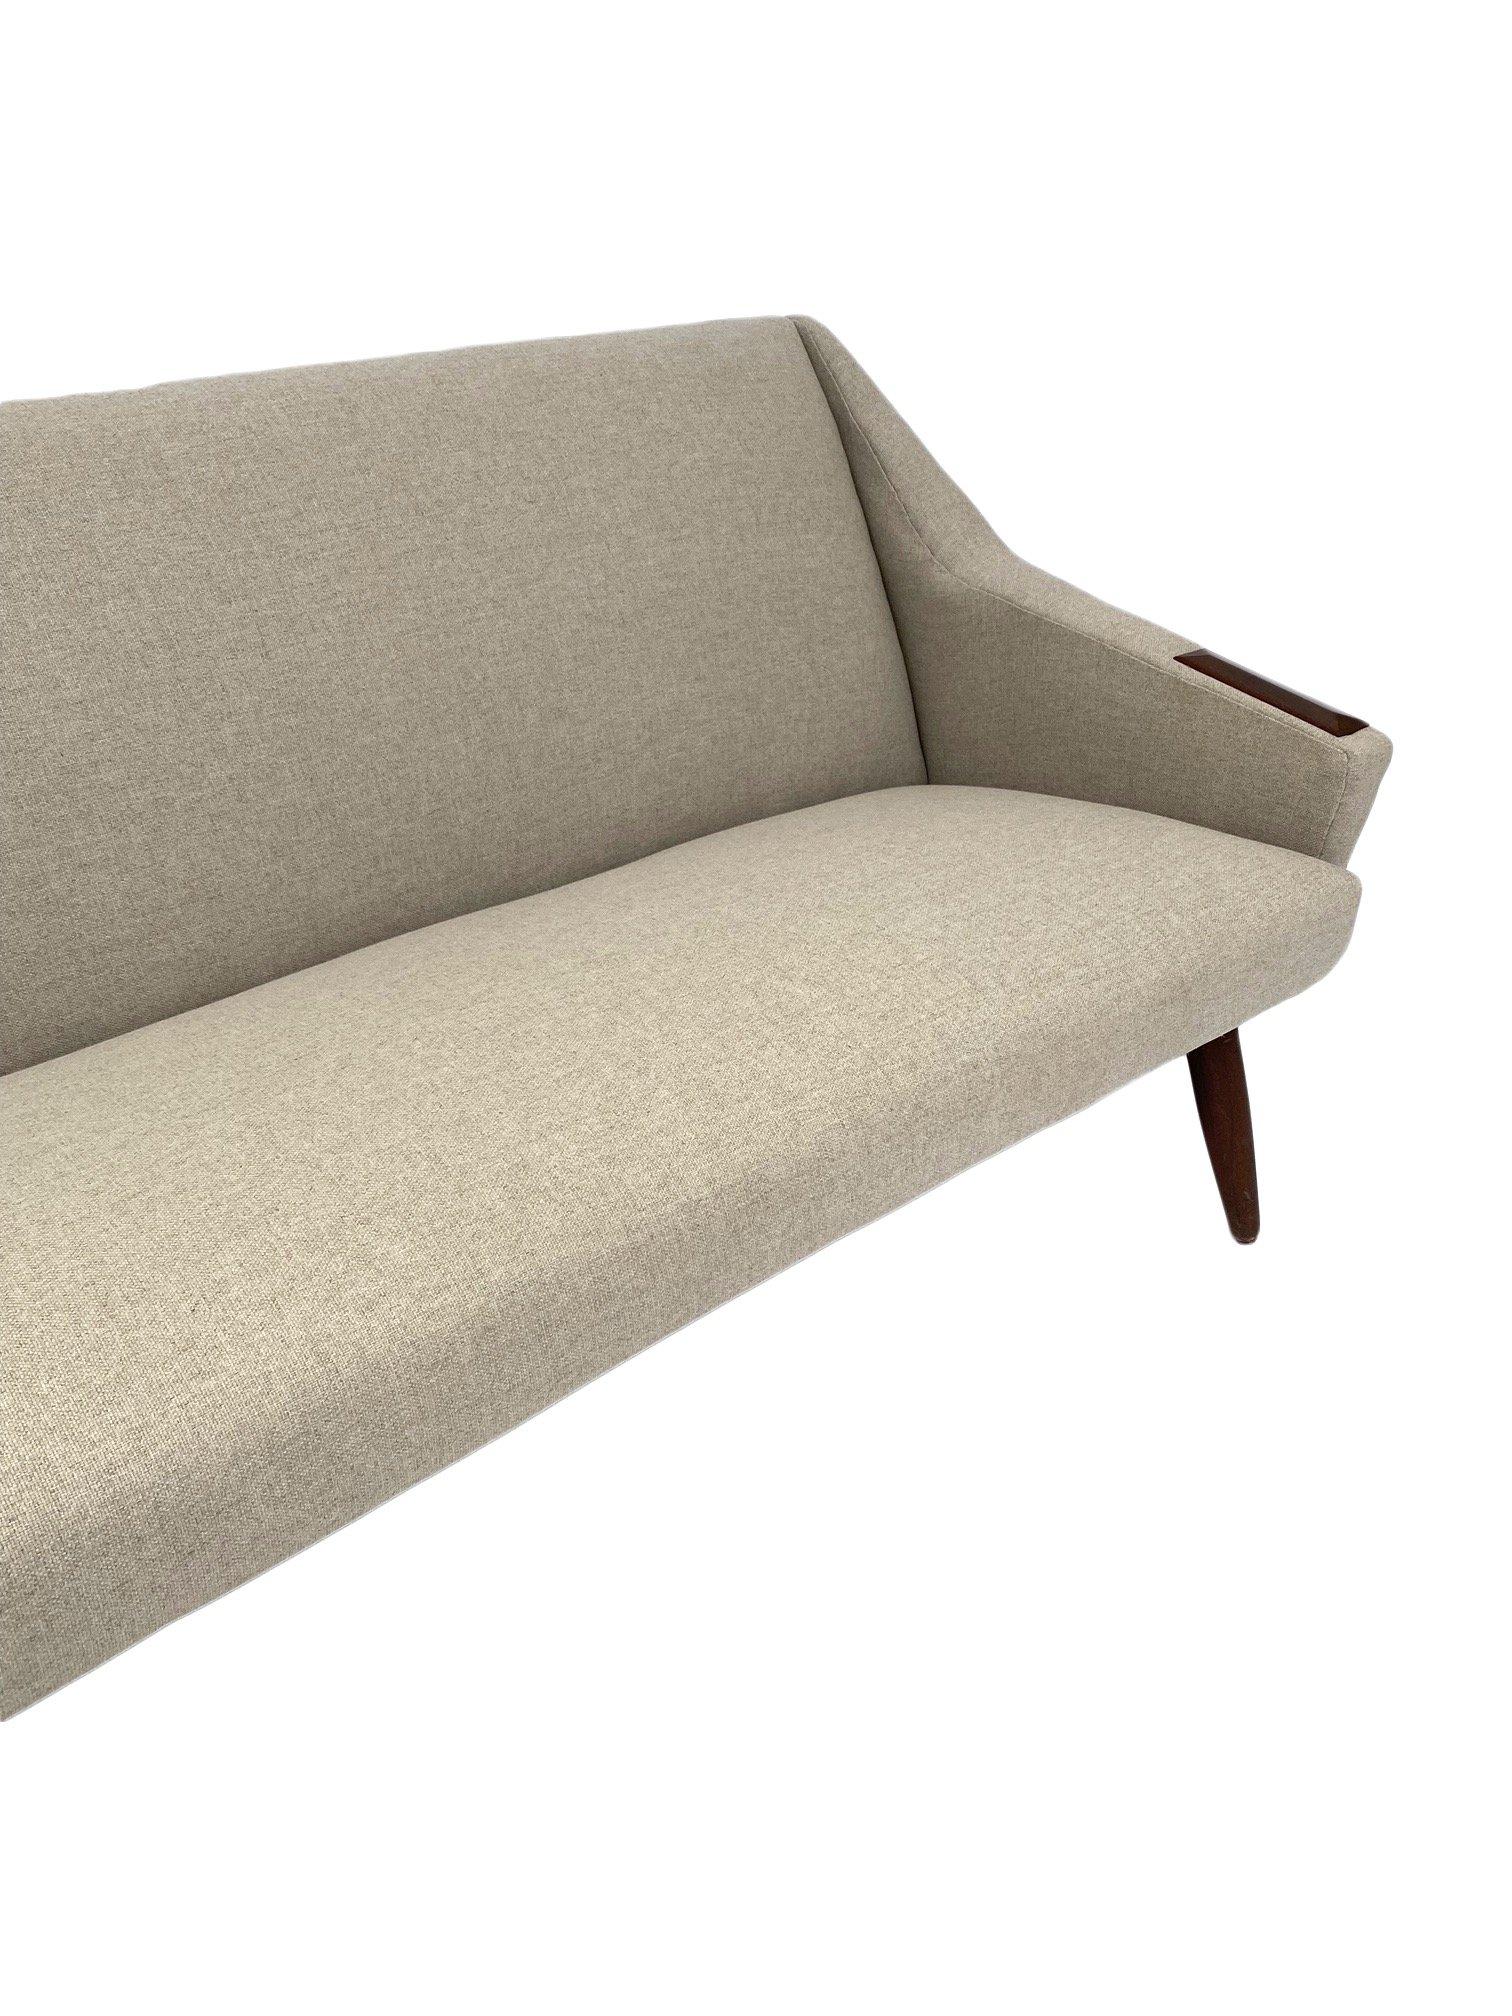 Cream Wool 3 Seater Sofa with Teak Paws Mid Century 1960s Danish For Sale 7